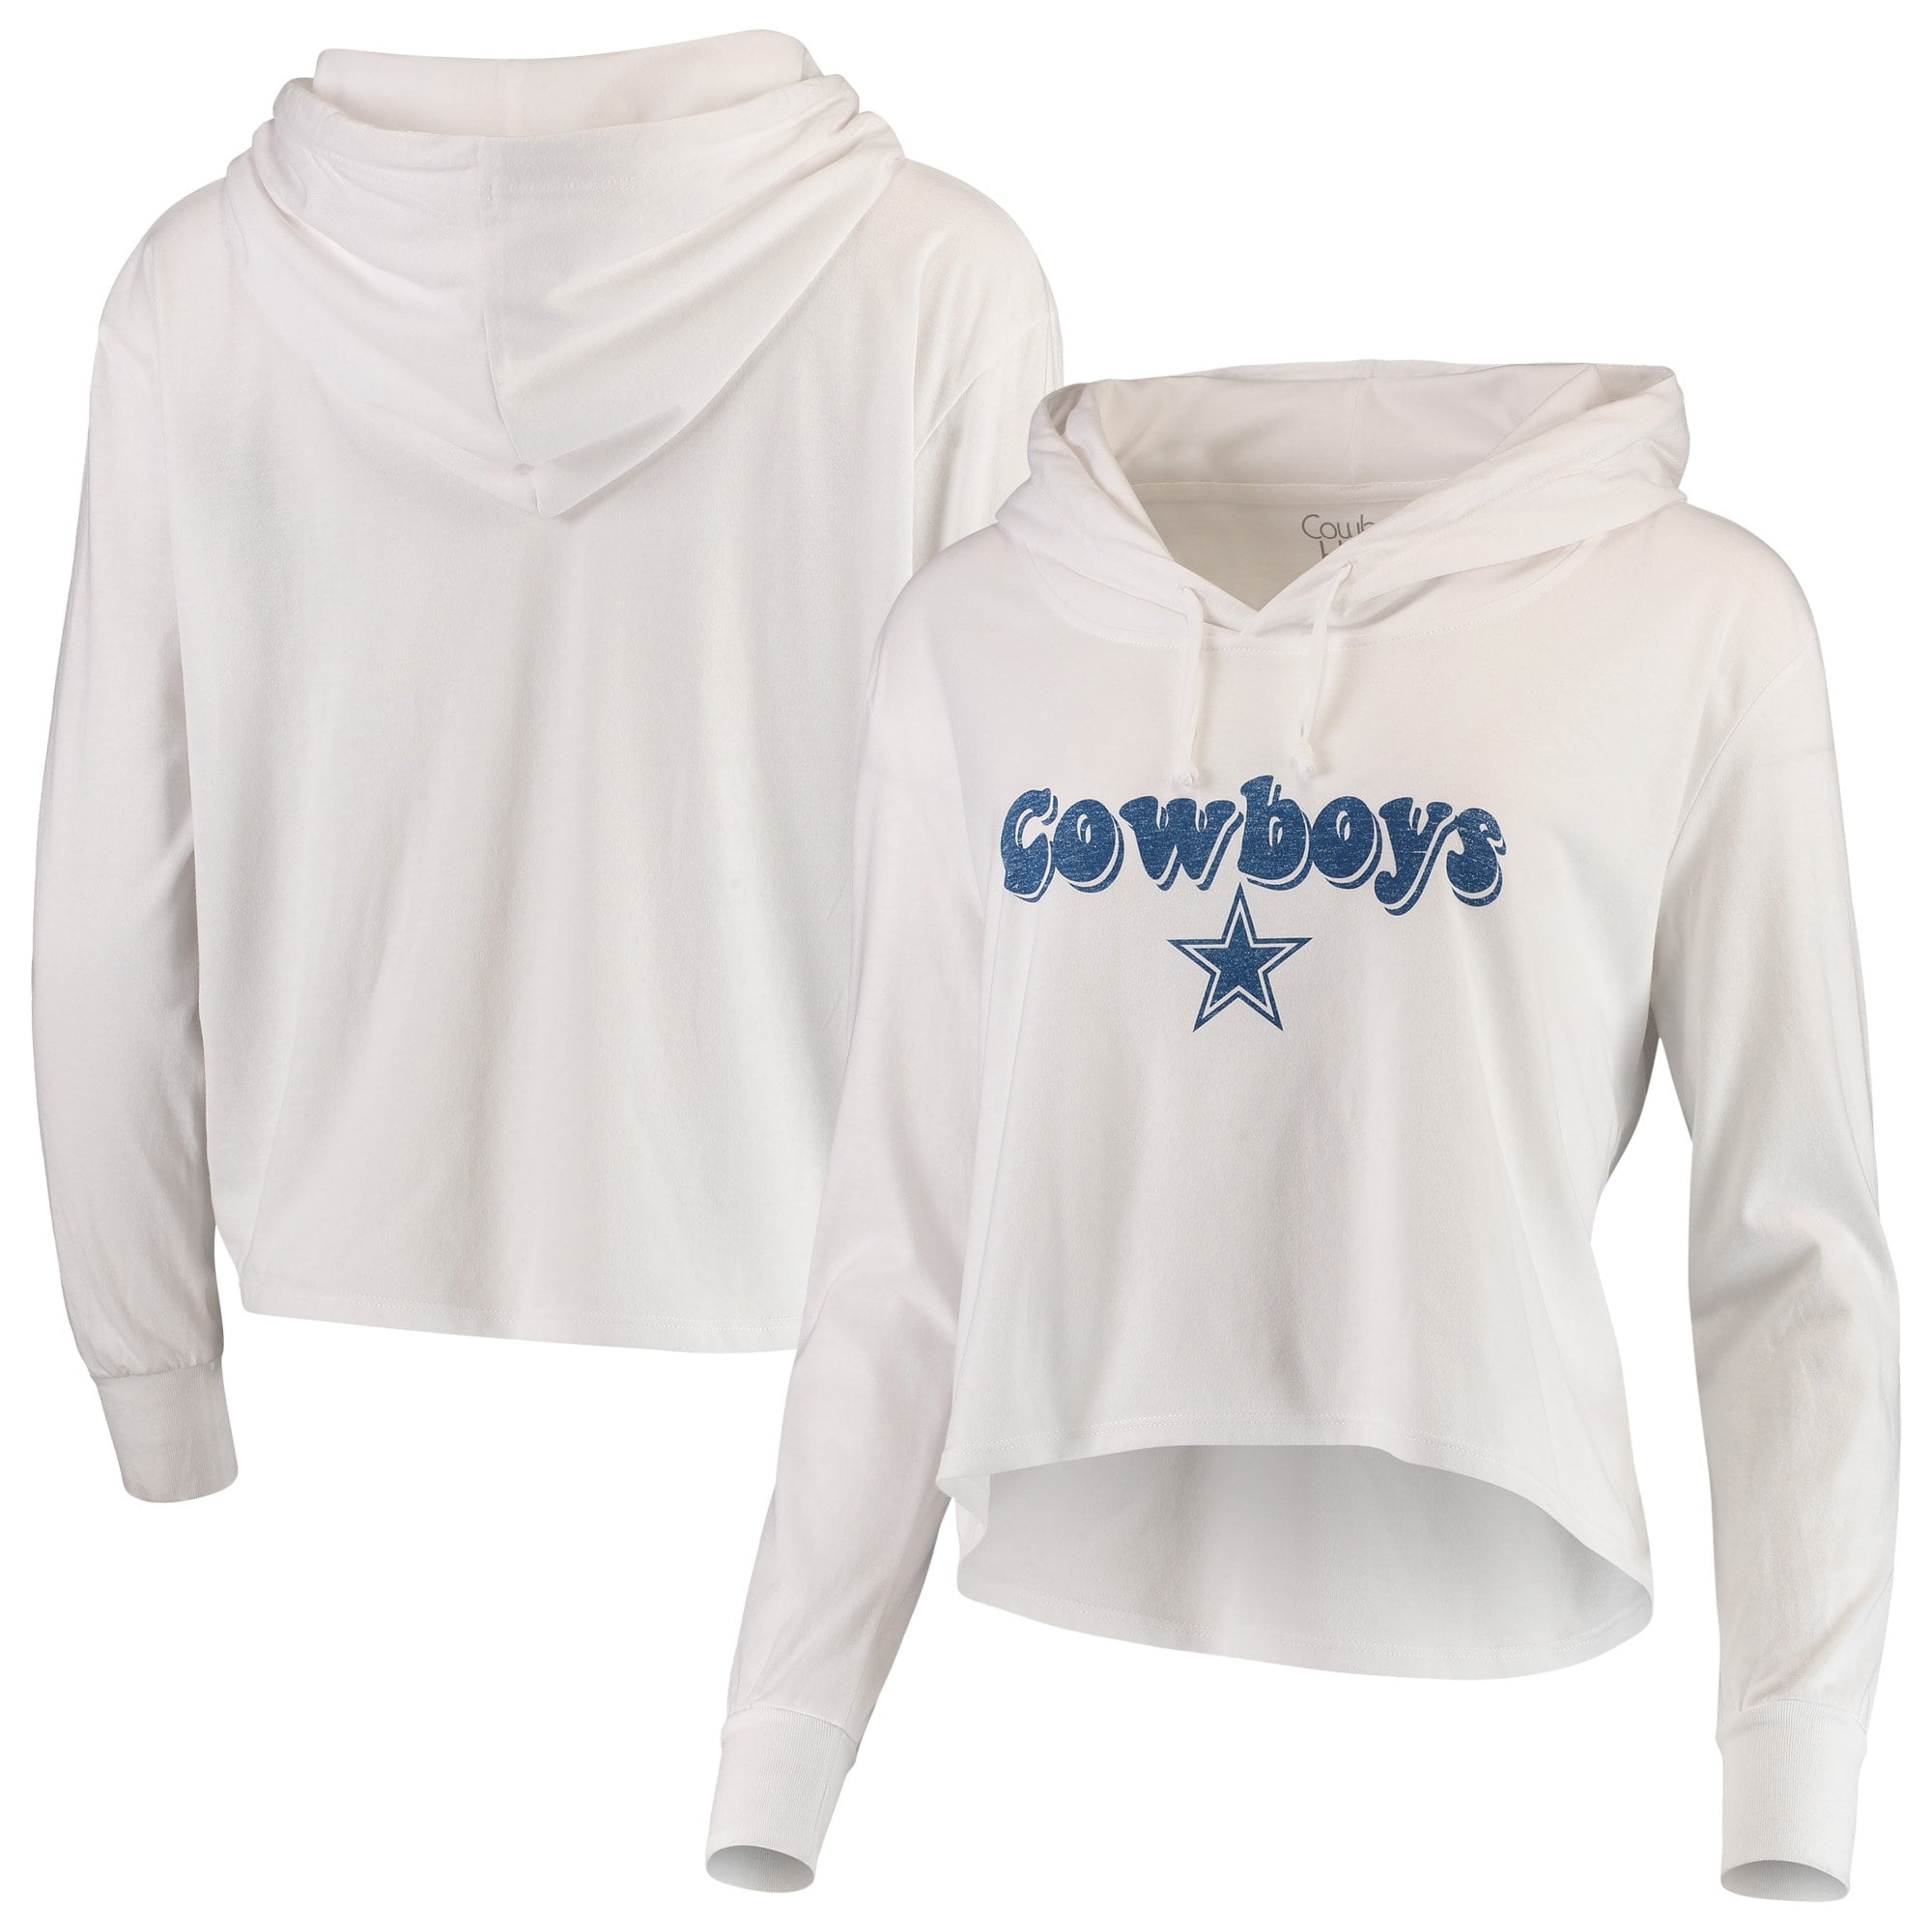 cowboys women's sweatshirt